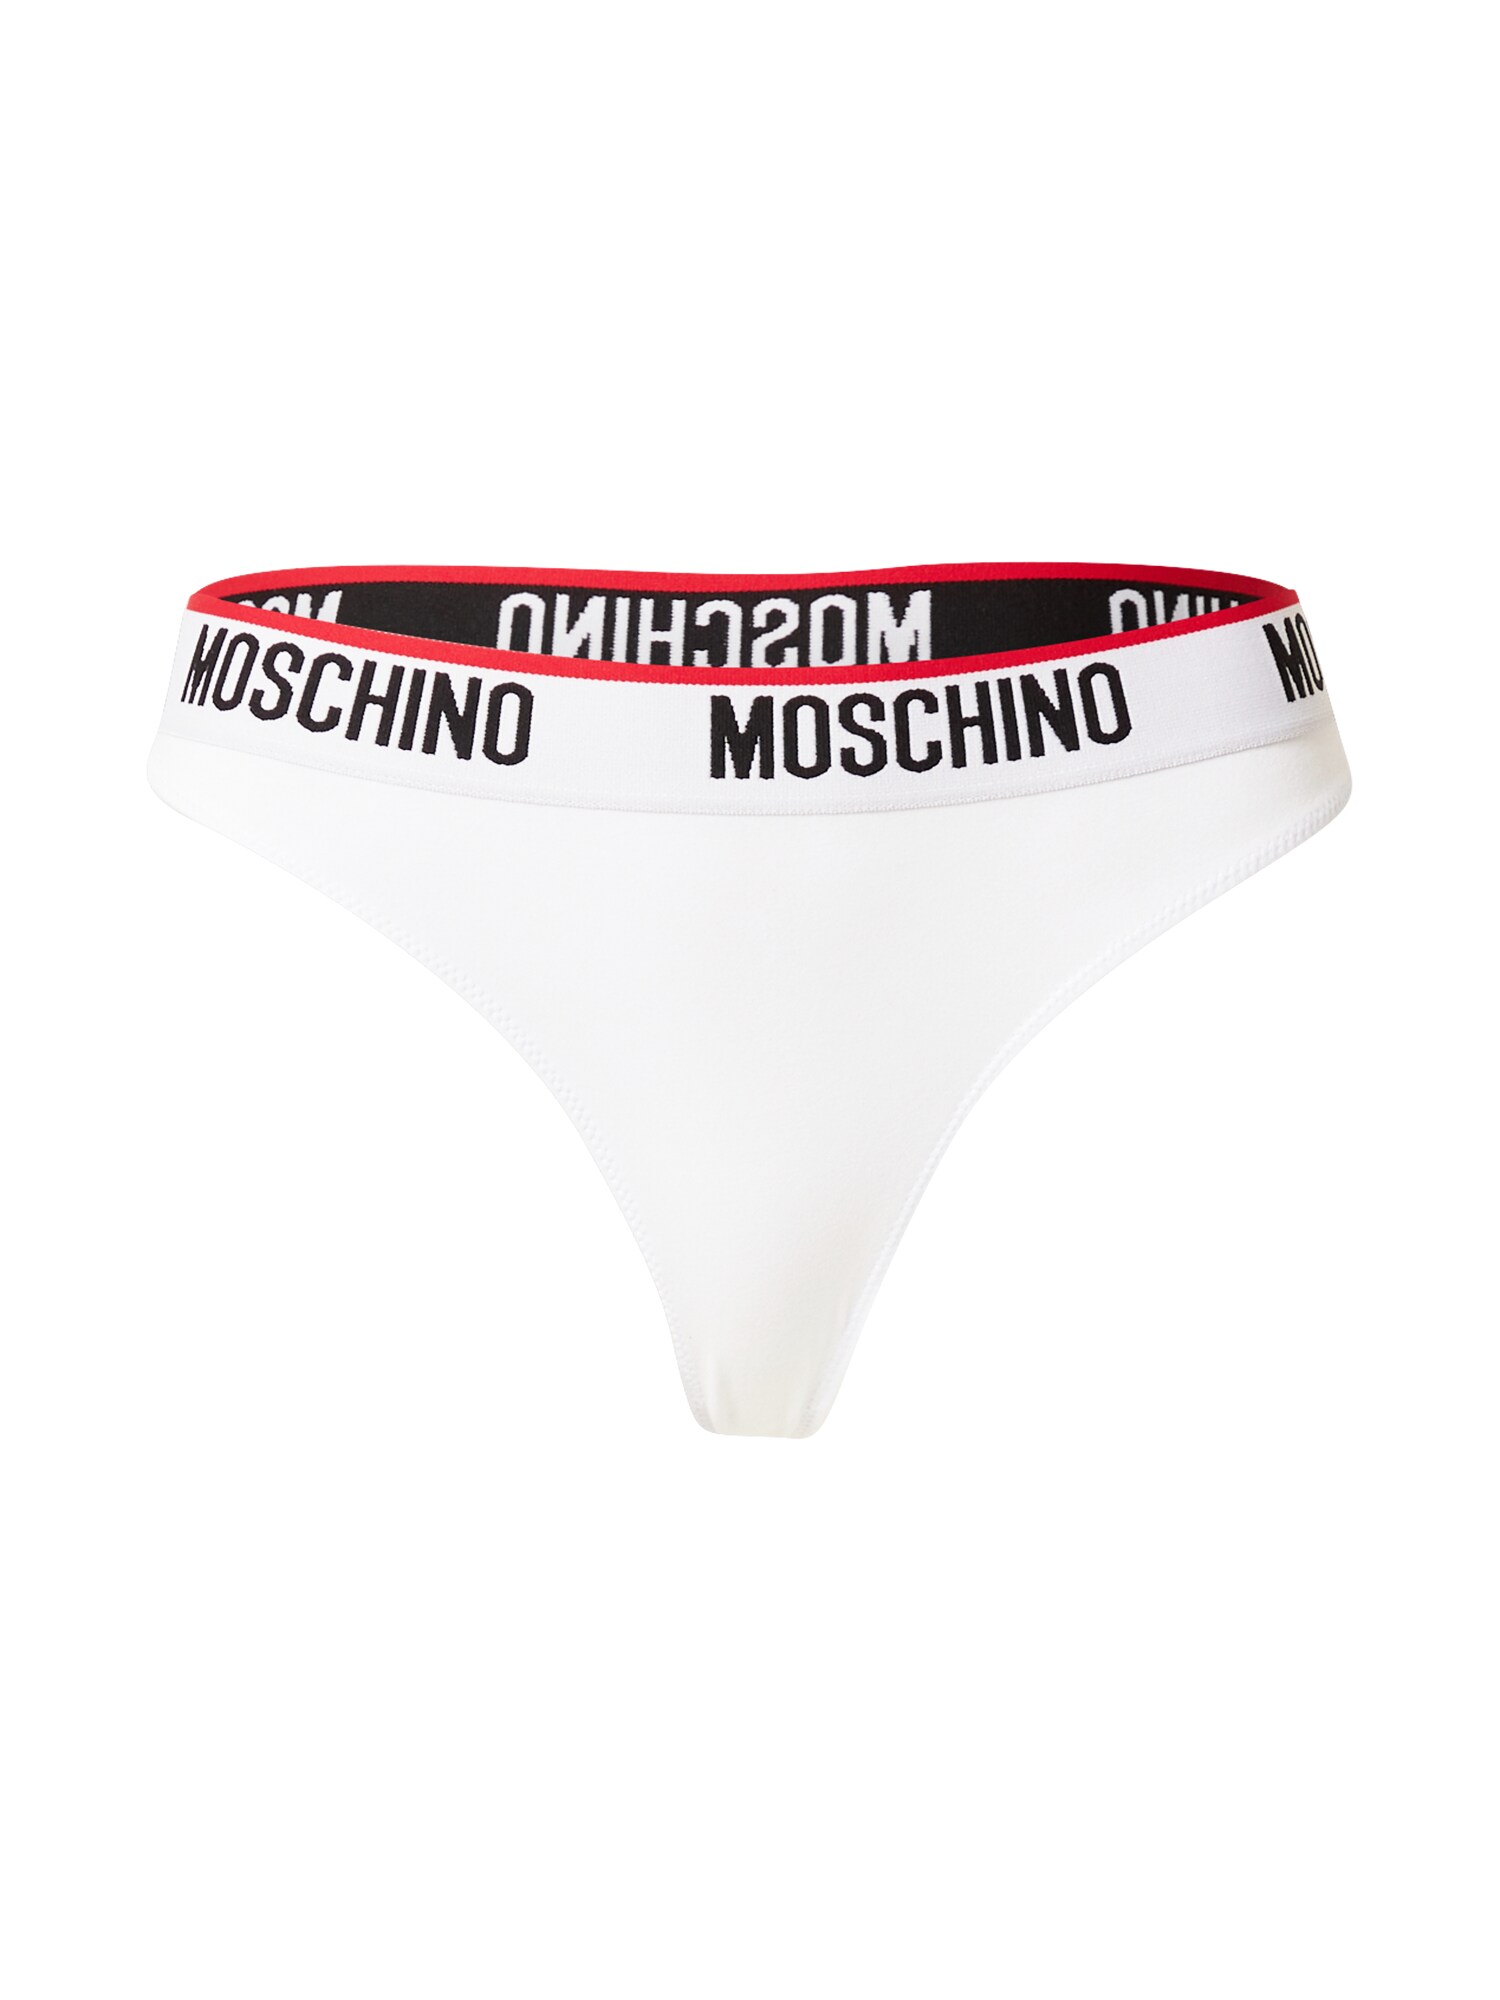 Moschino Underwear Siaurikės raudona / juoda / balta